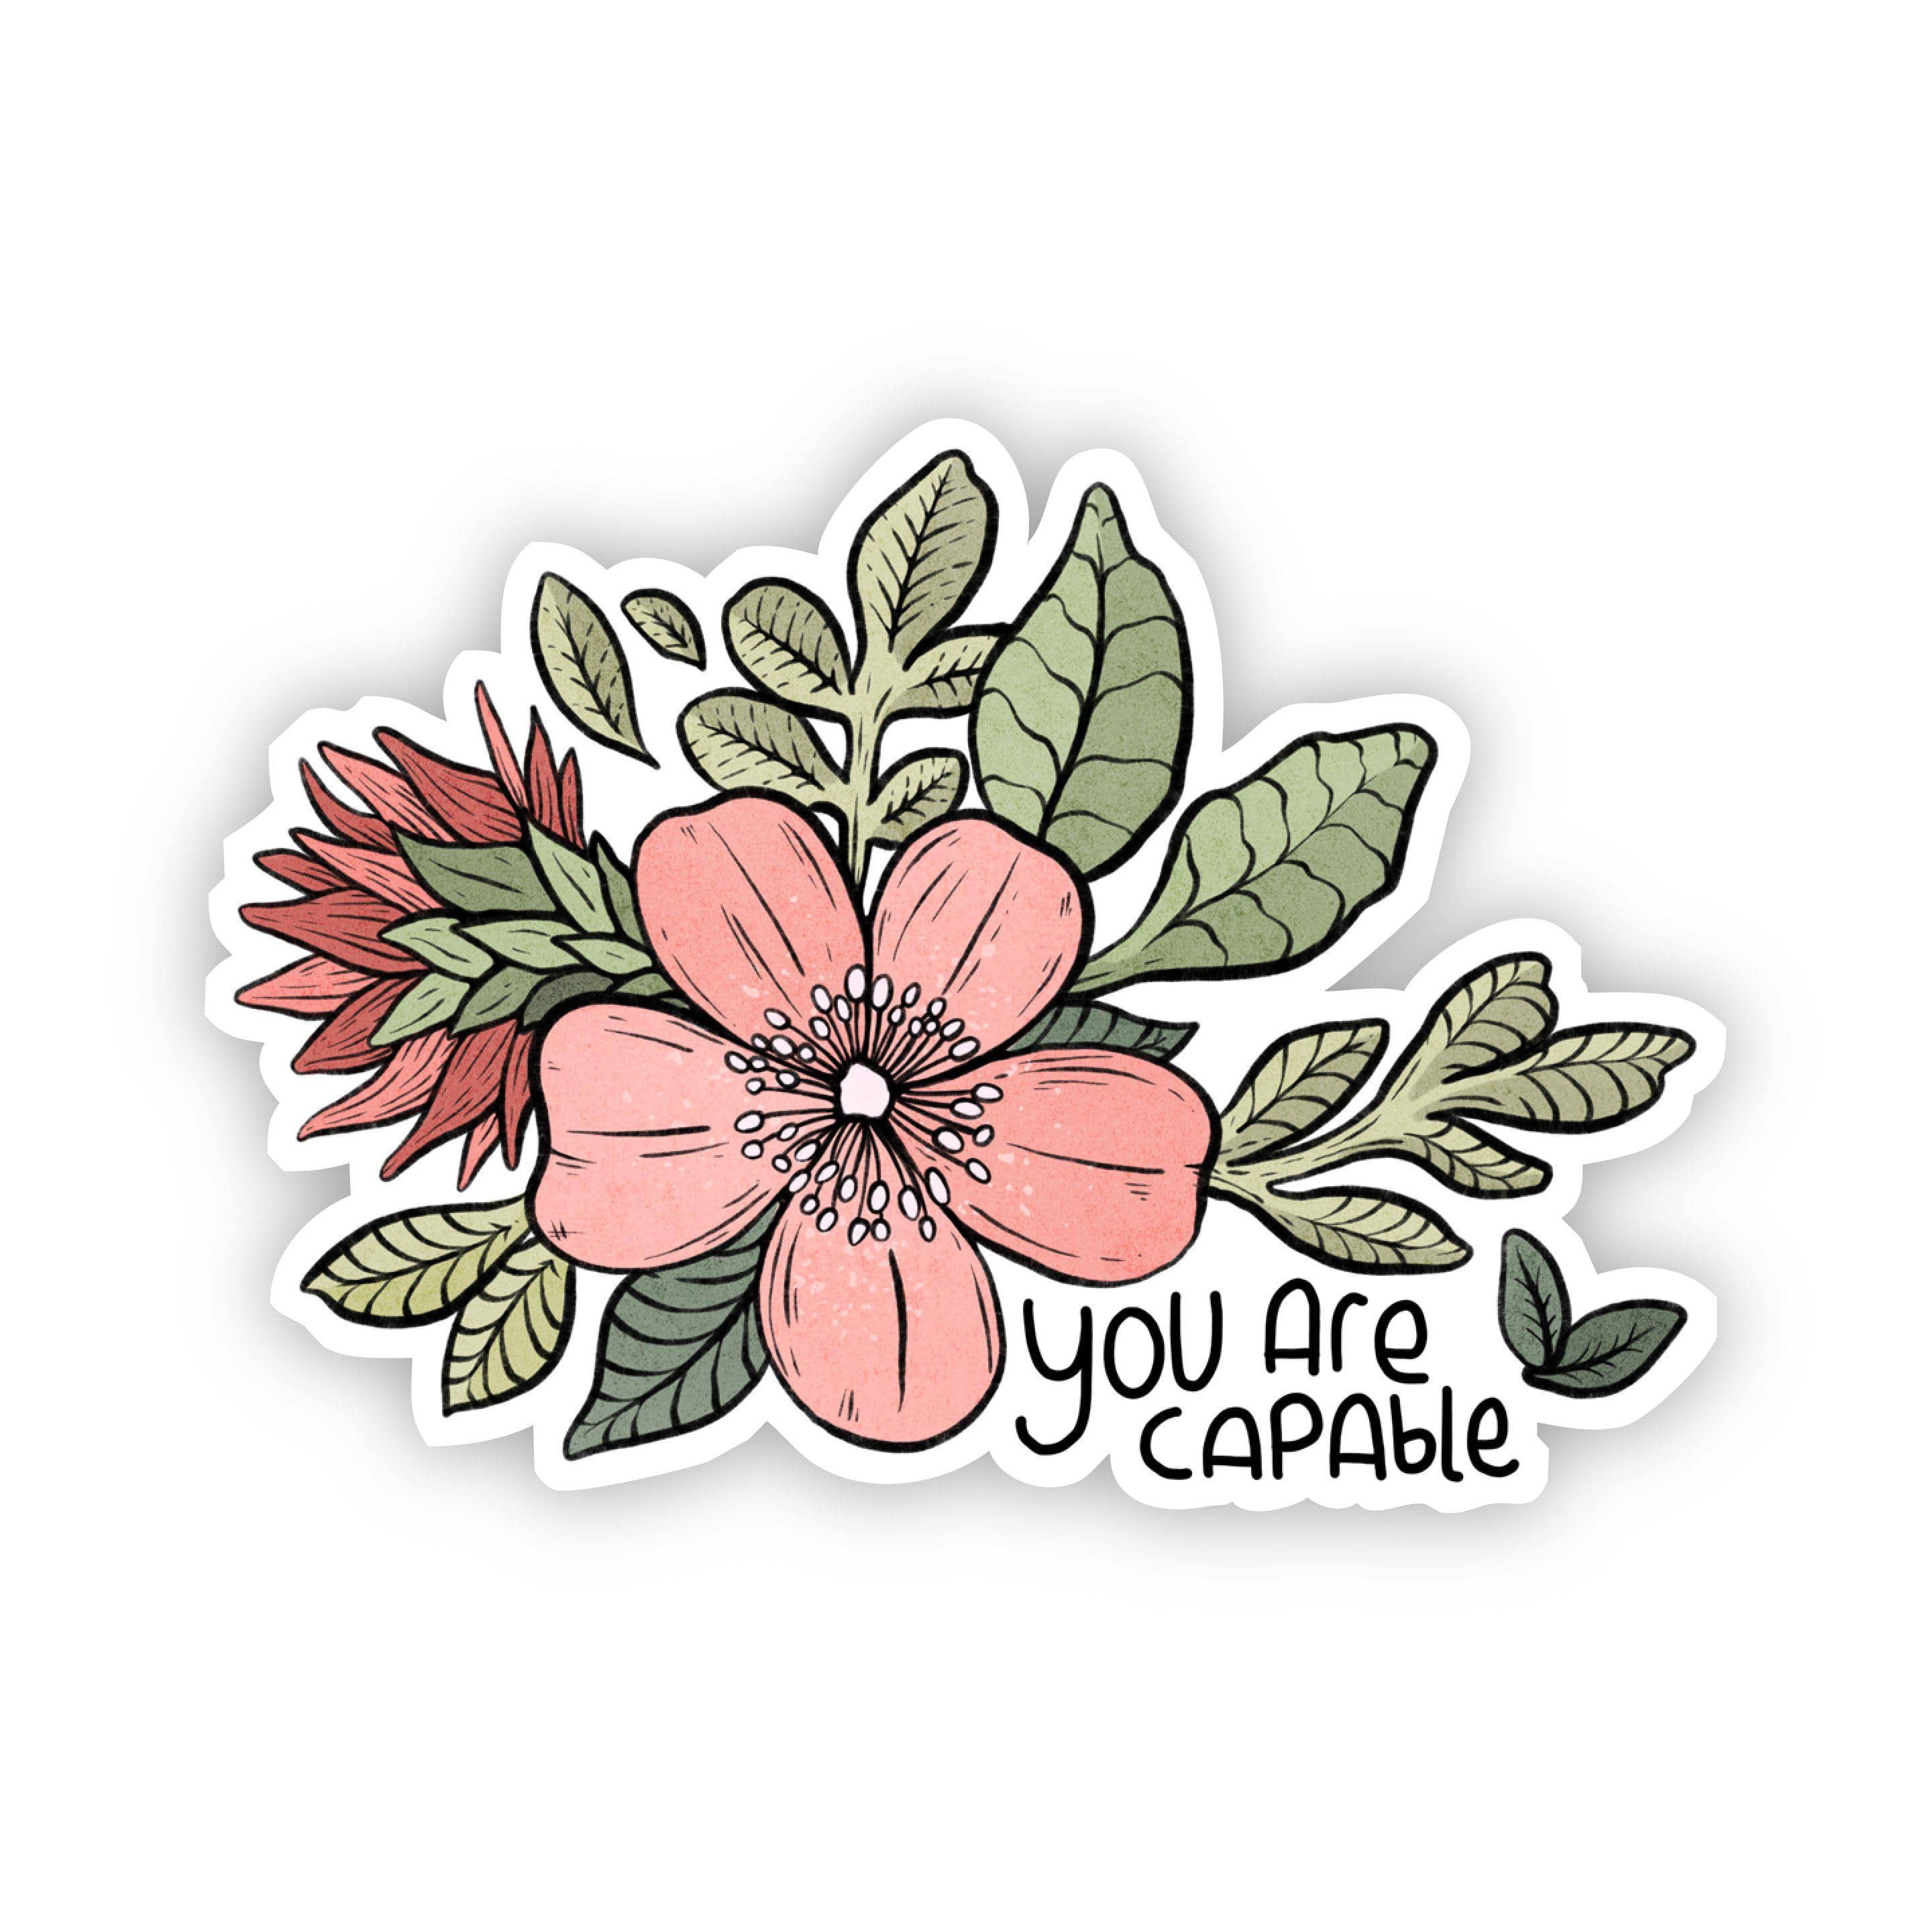 Big Moods Positivity Floral Sticker Pack 5pc Connecticut, 44% OFF